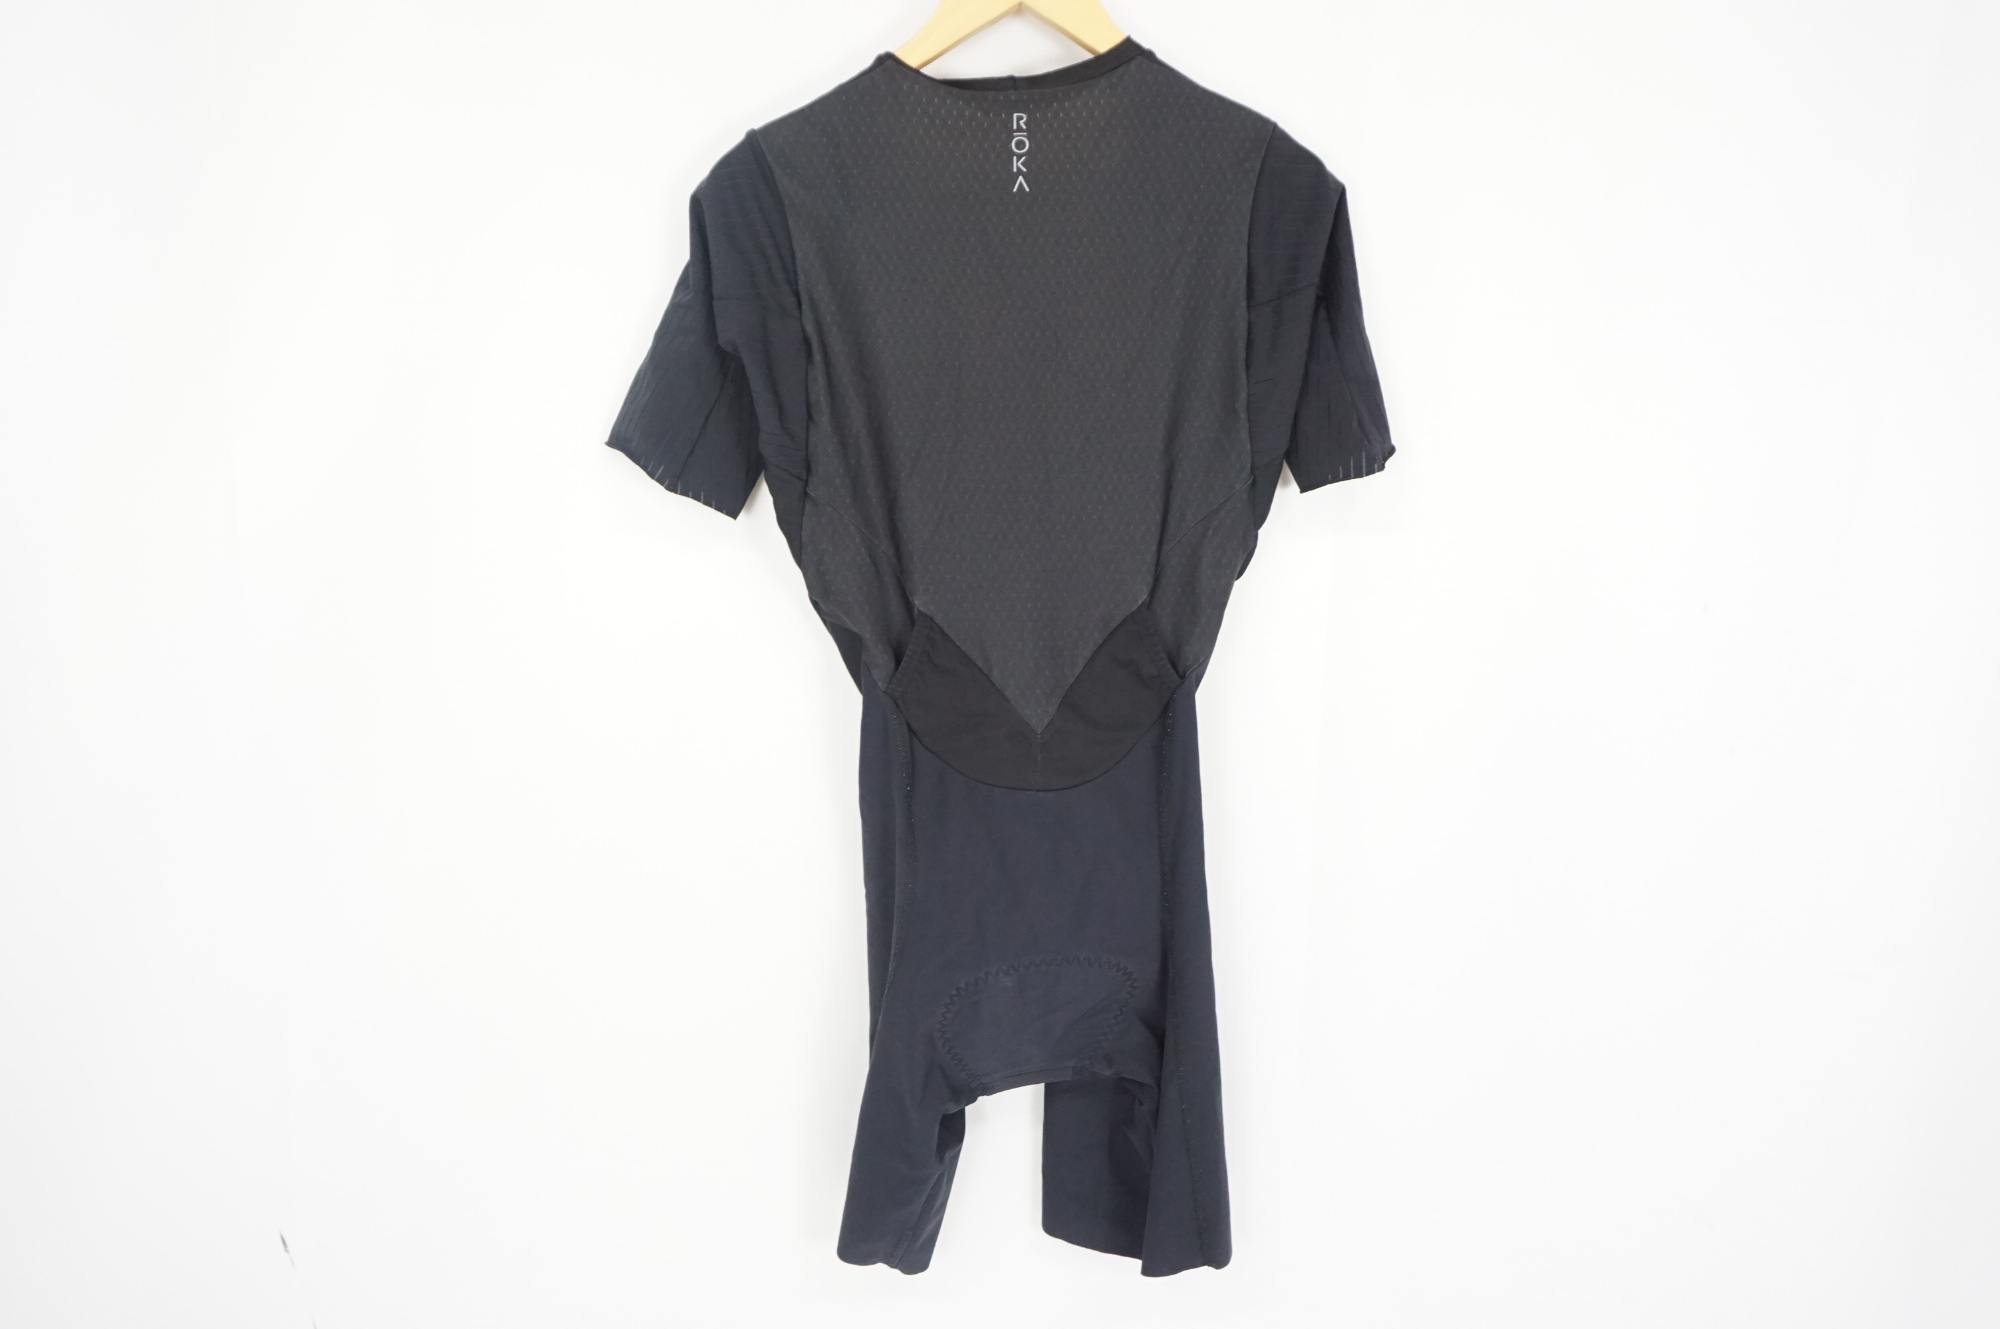 ROKA [roka] Elite Aero Try Suit triathlon for L size Try suit / Omiya shop 